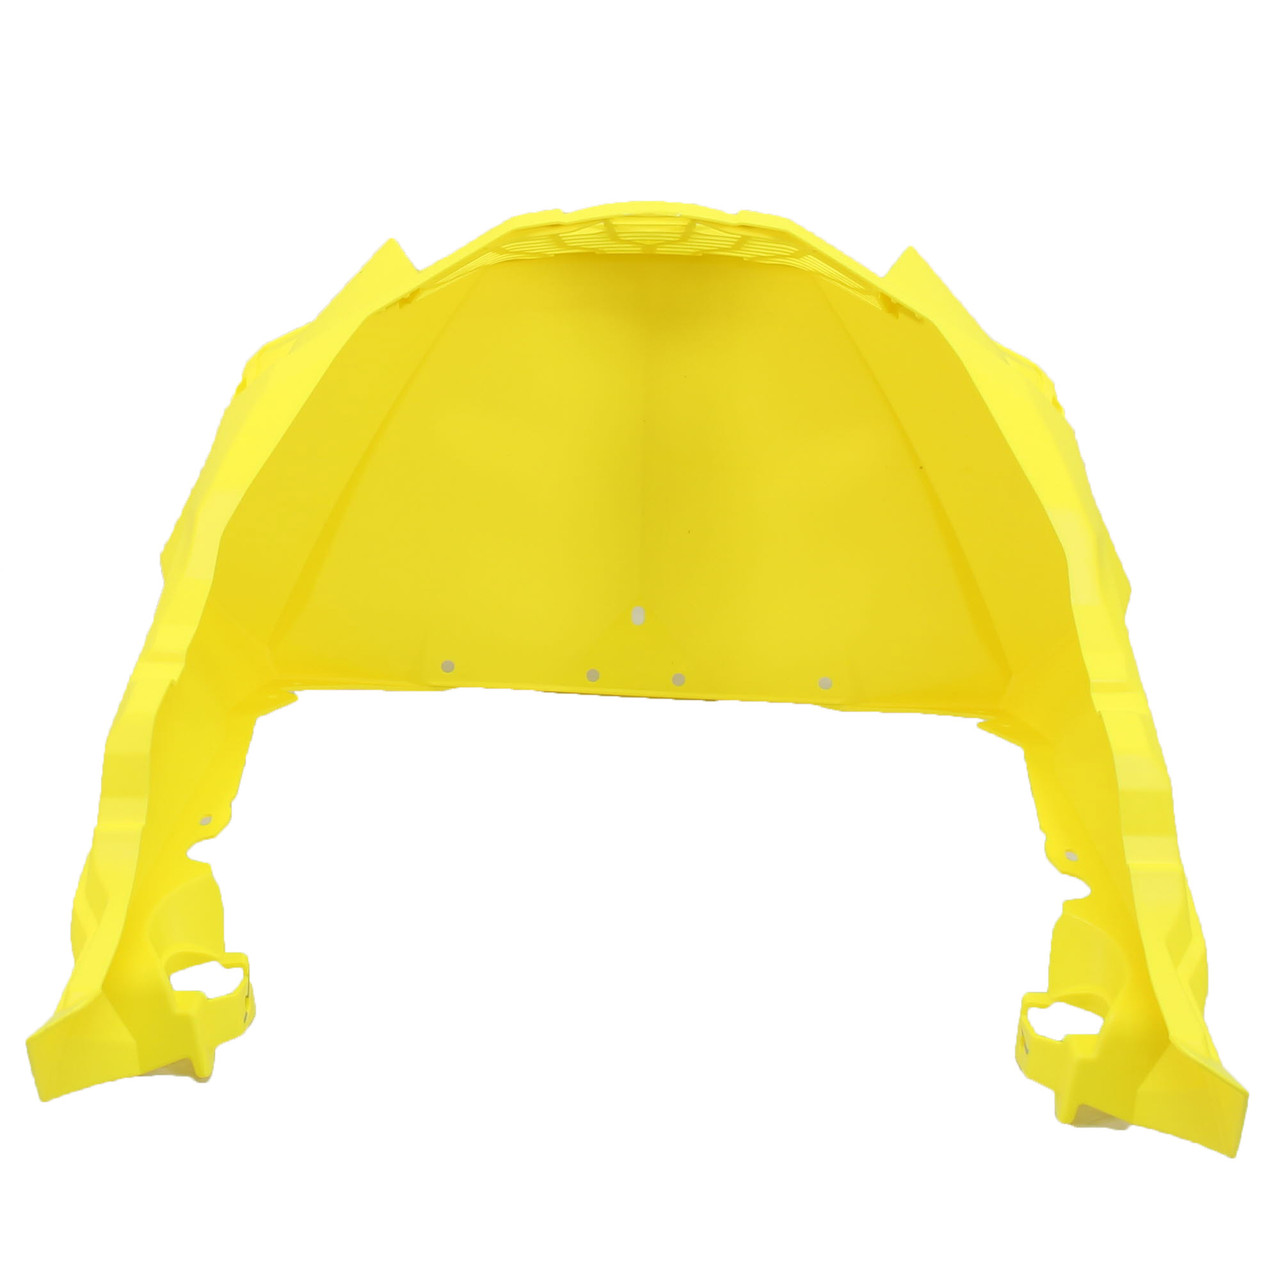 Ski-Doo New OEM Front Bottom Pan Sunburst Yellow 2015-2017 MXZ 502007396